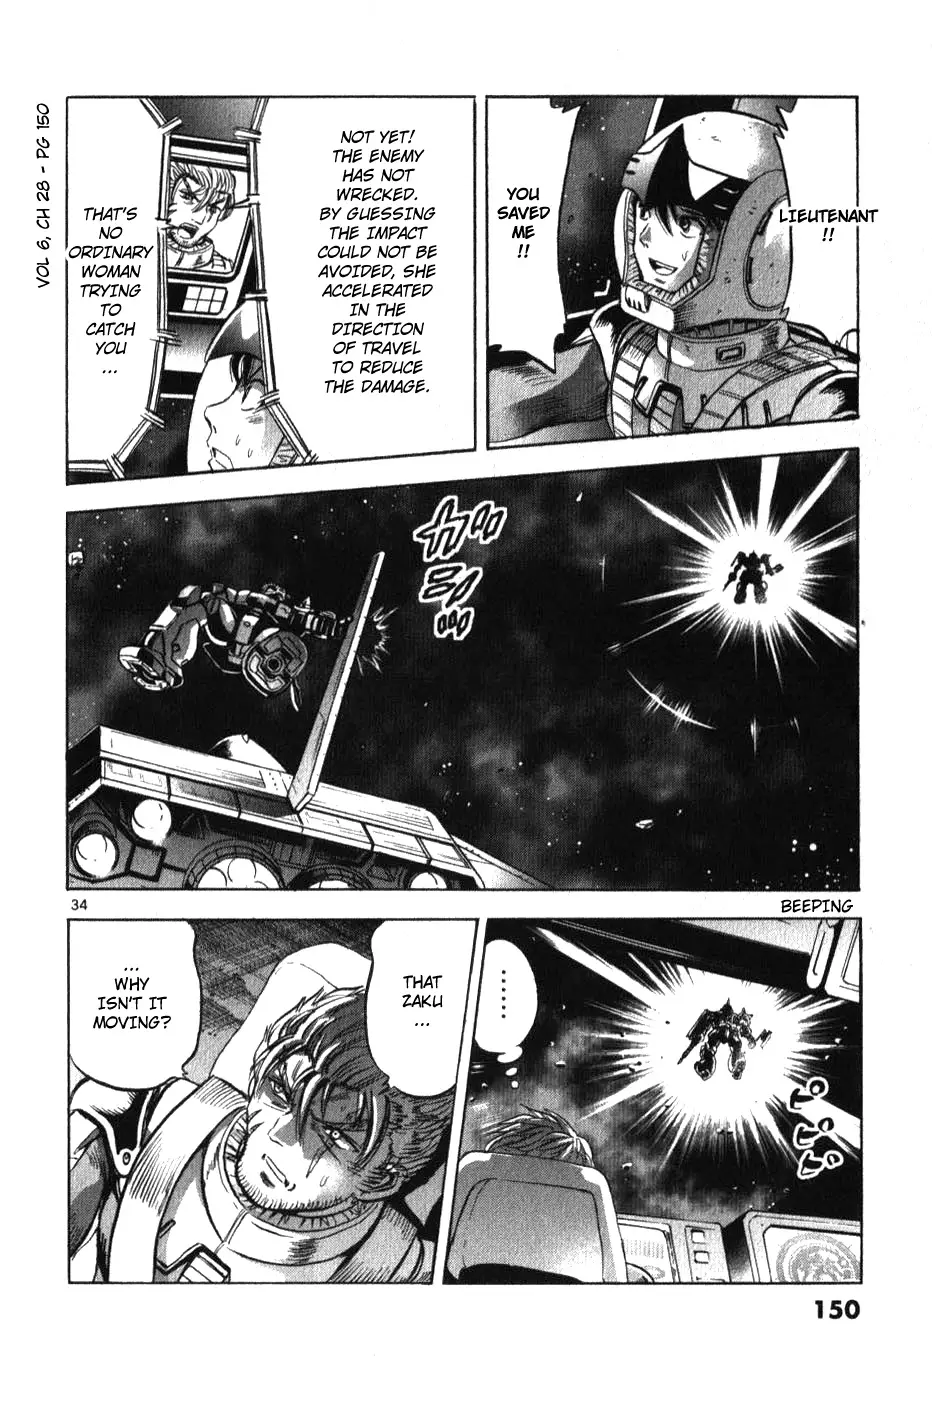 Mobile Suit Gundam Aggressor - 28 page 32-594fd232